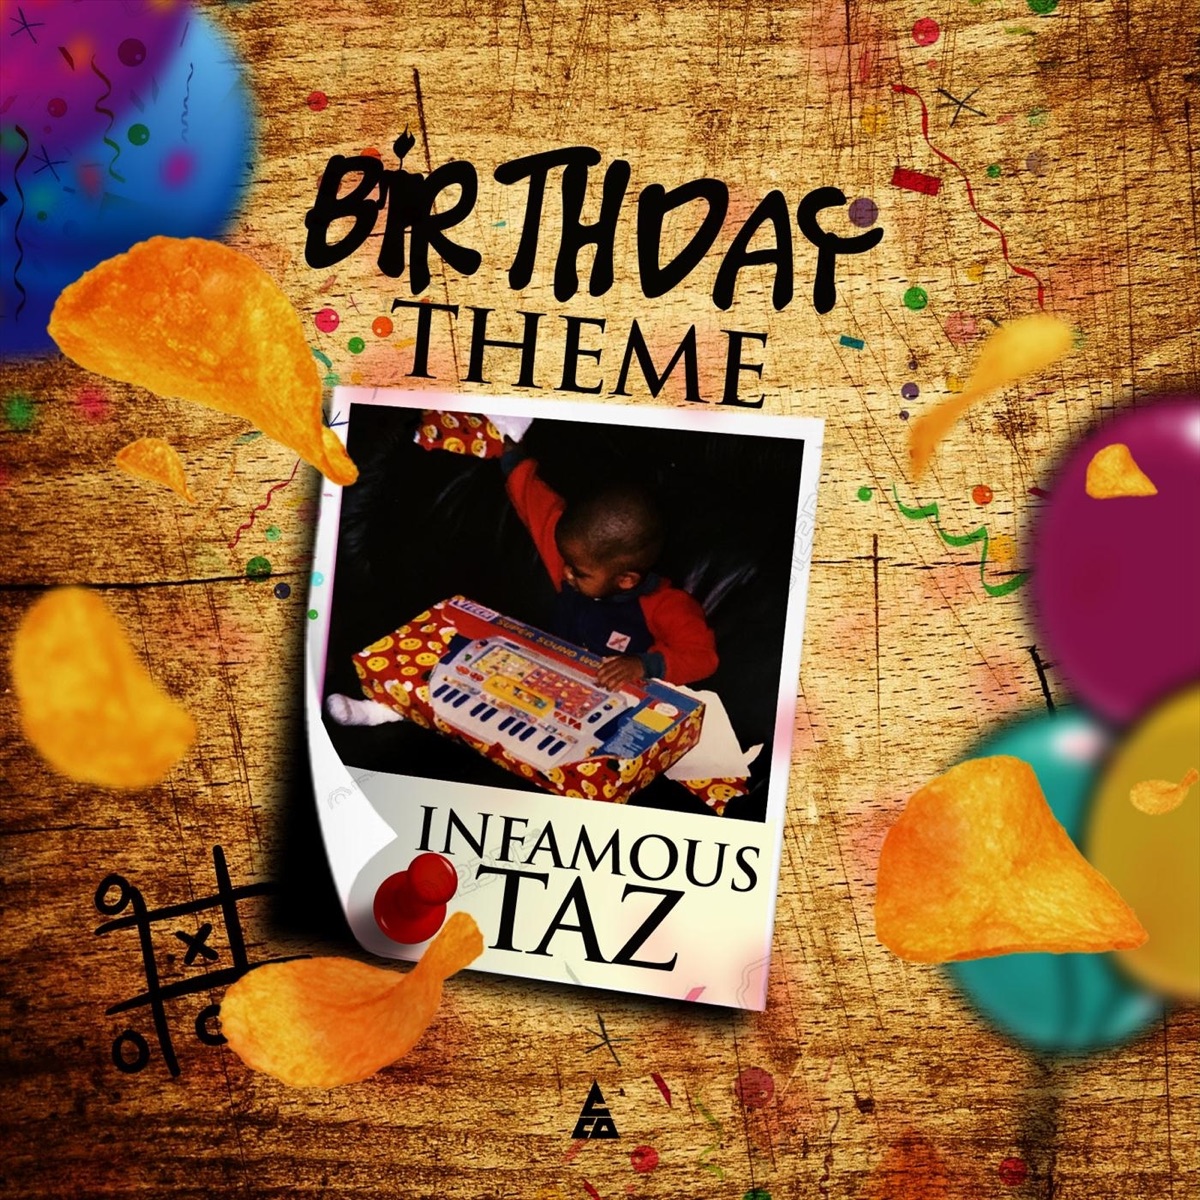 Birthday Theme - Single by Infamous Taz on Apple Music